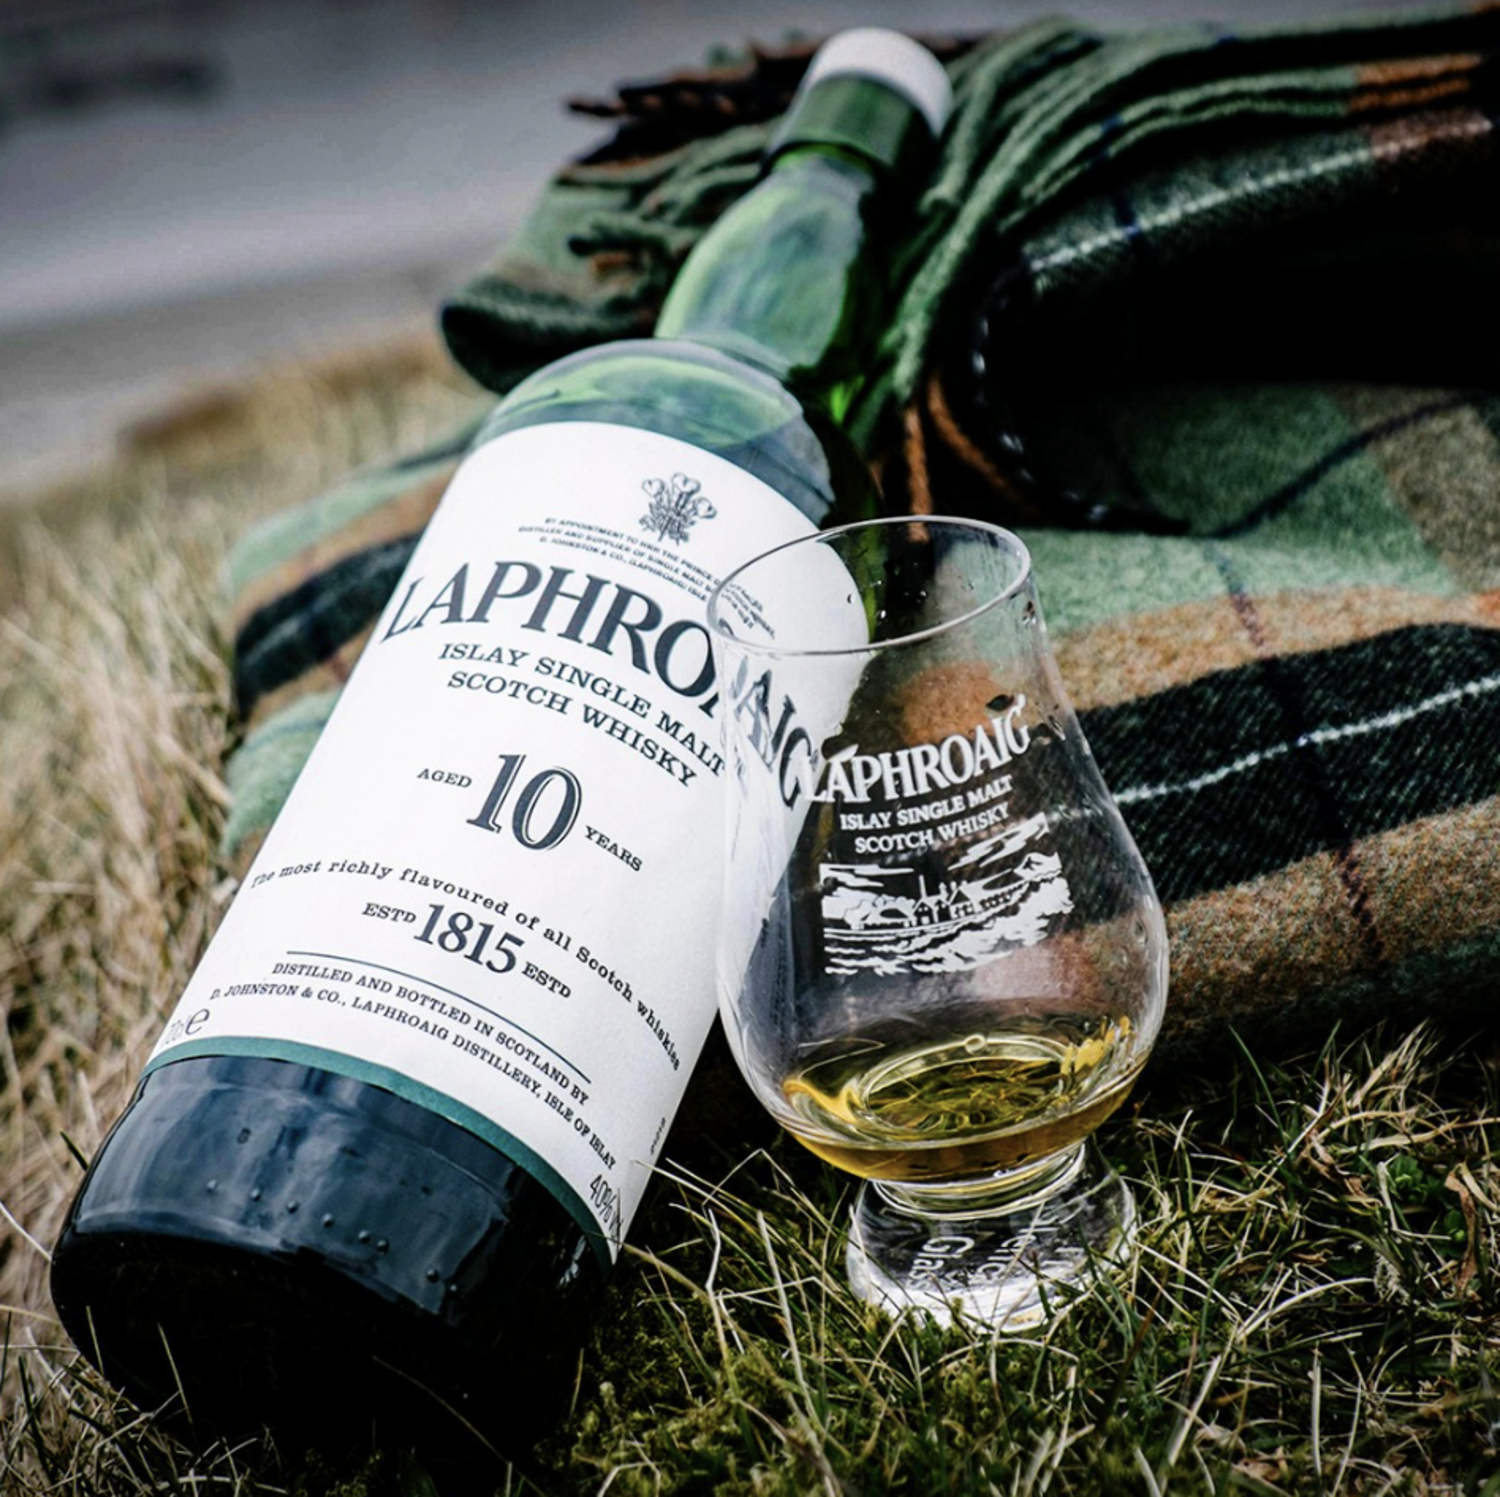 Laphroaig 10 Years Islay Single Malt Scotch Whisky